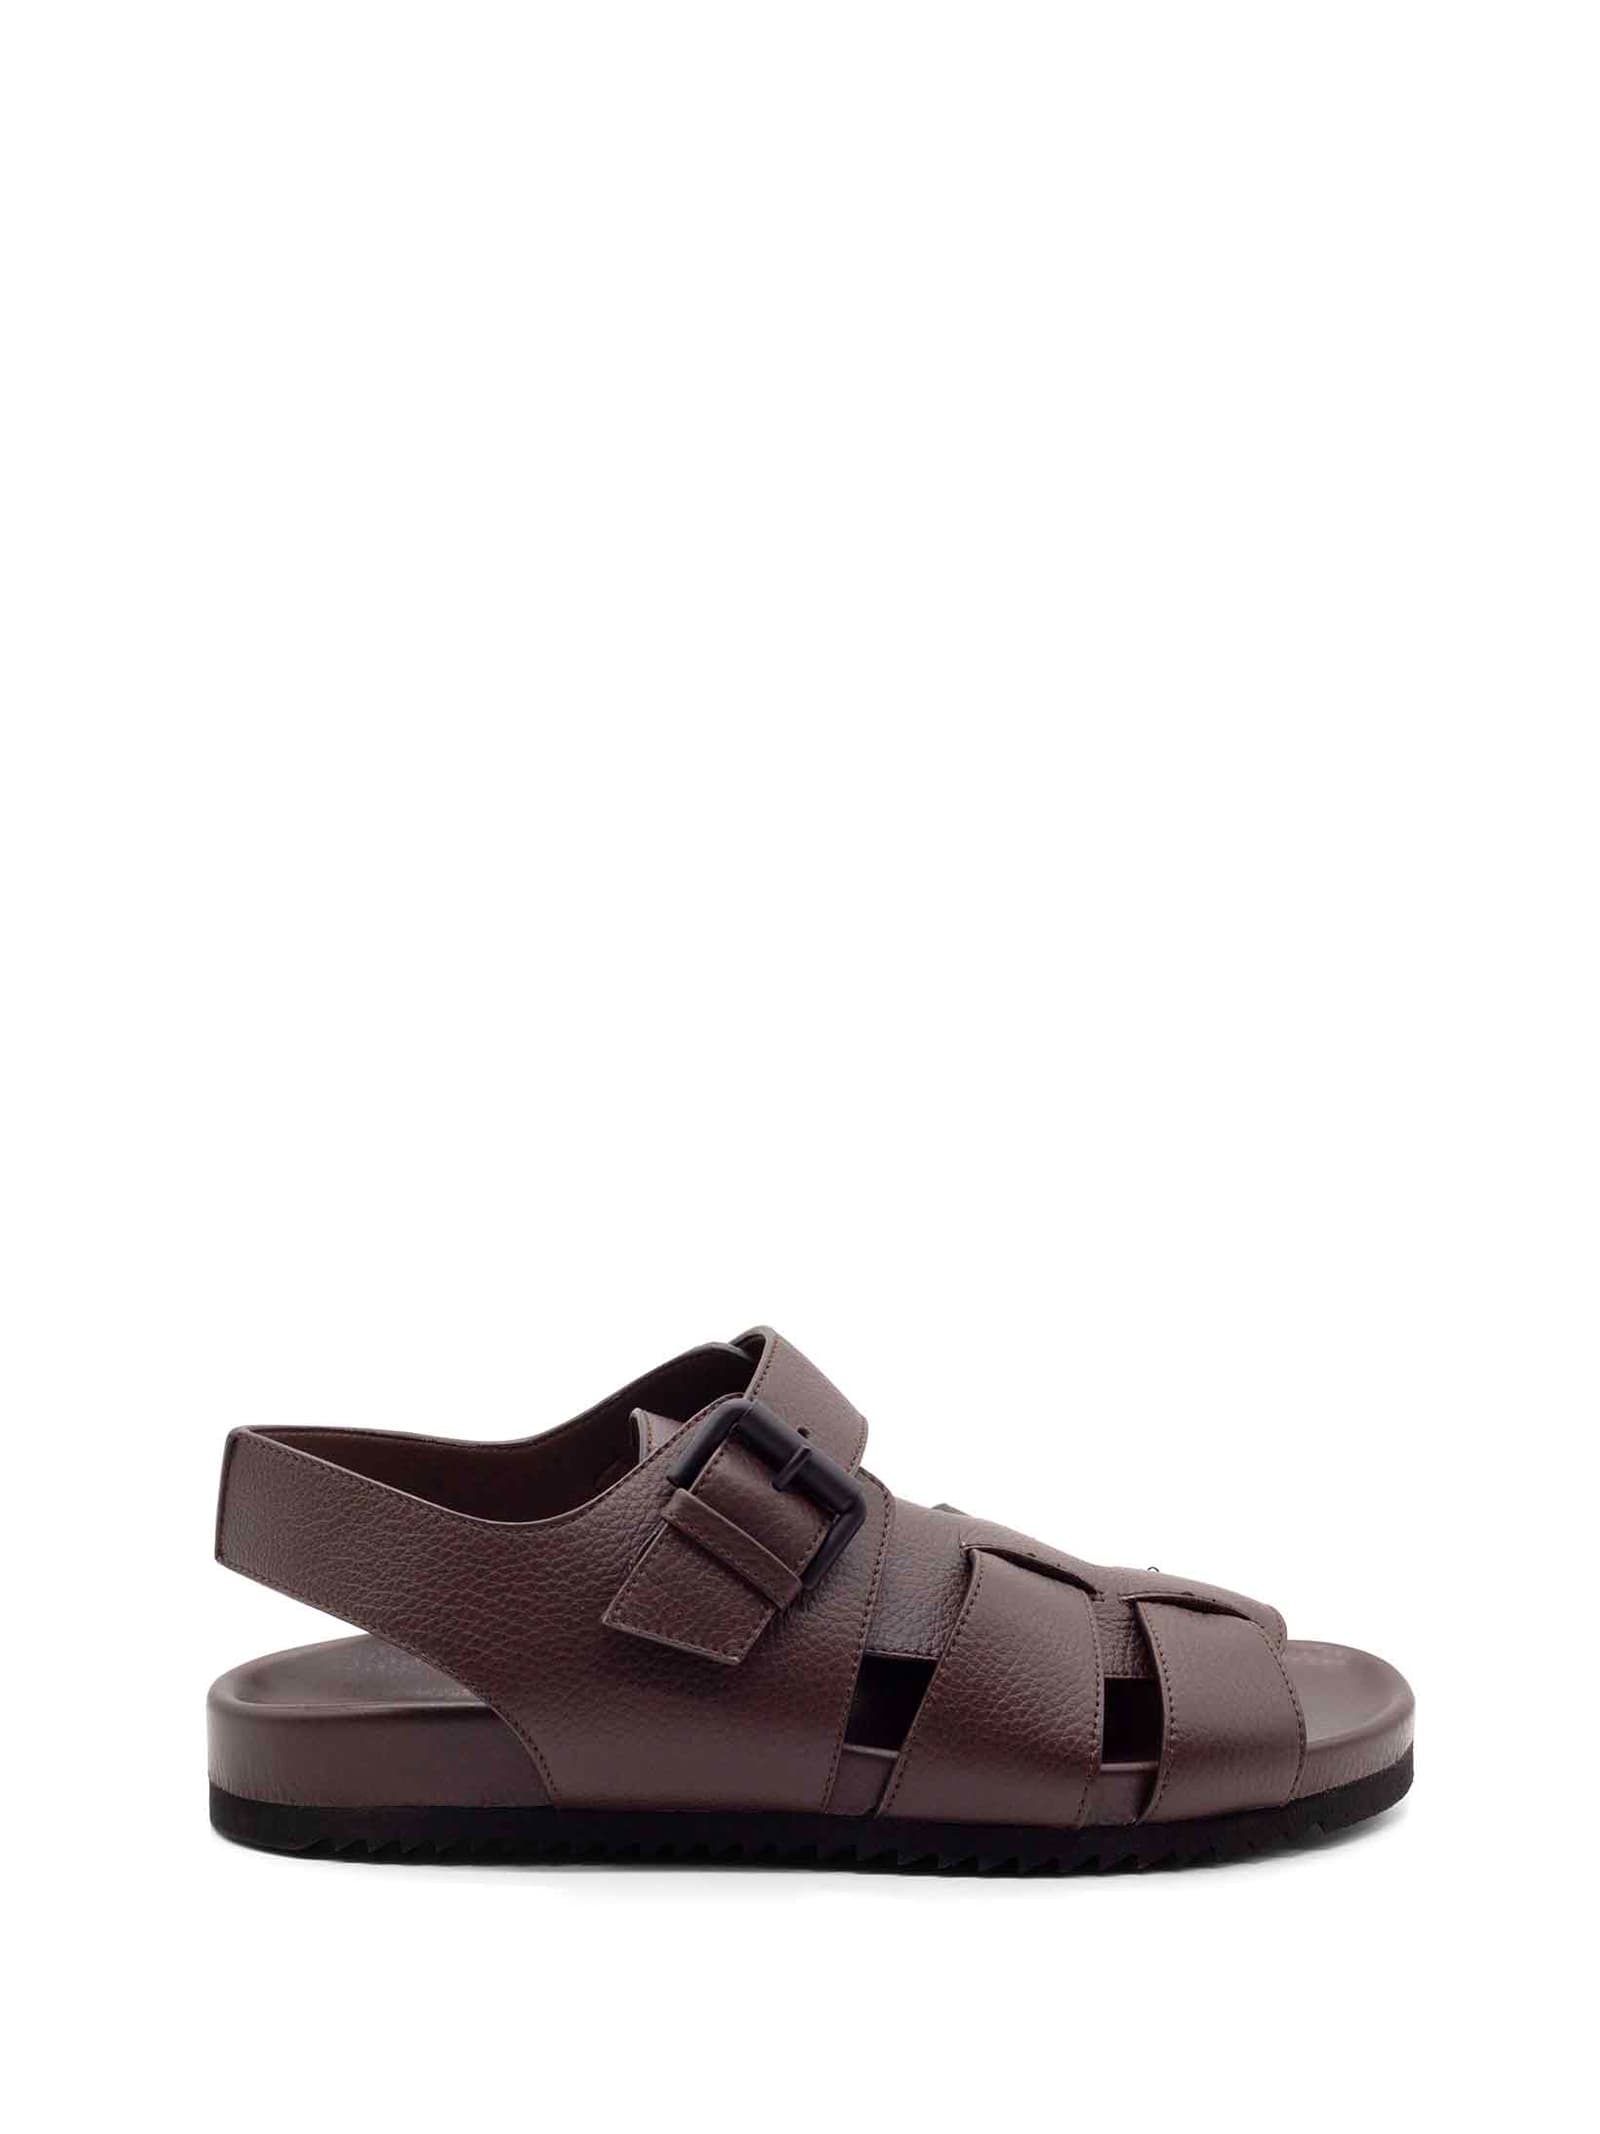 Vic Matié Mens Brown Leather Sandal